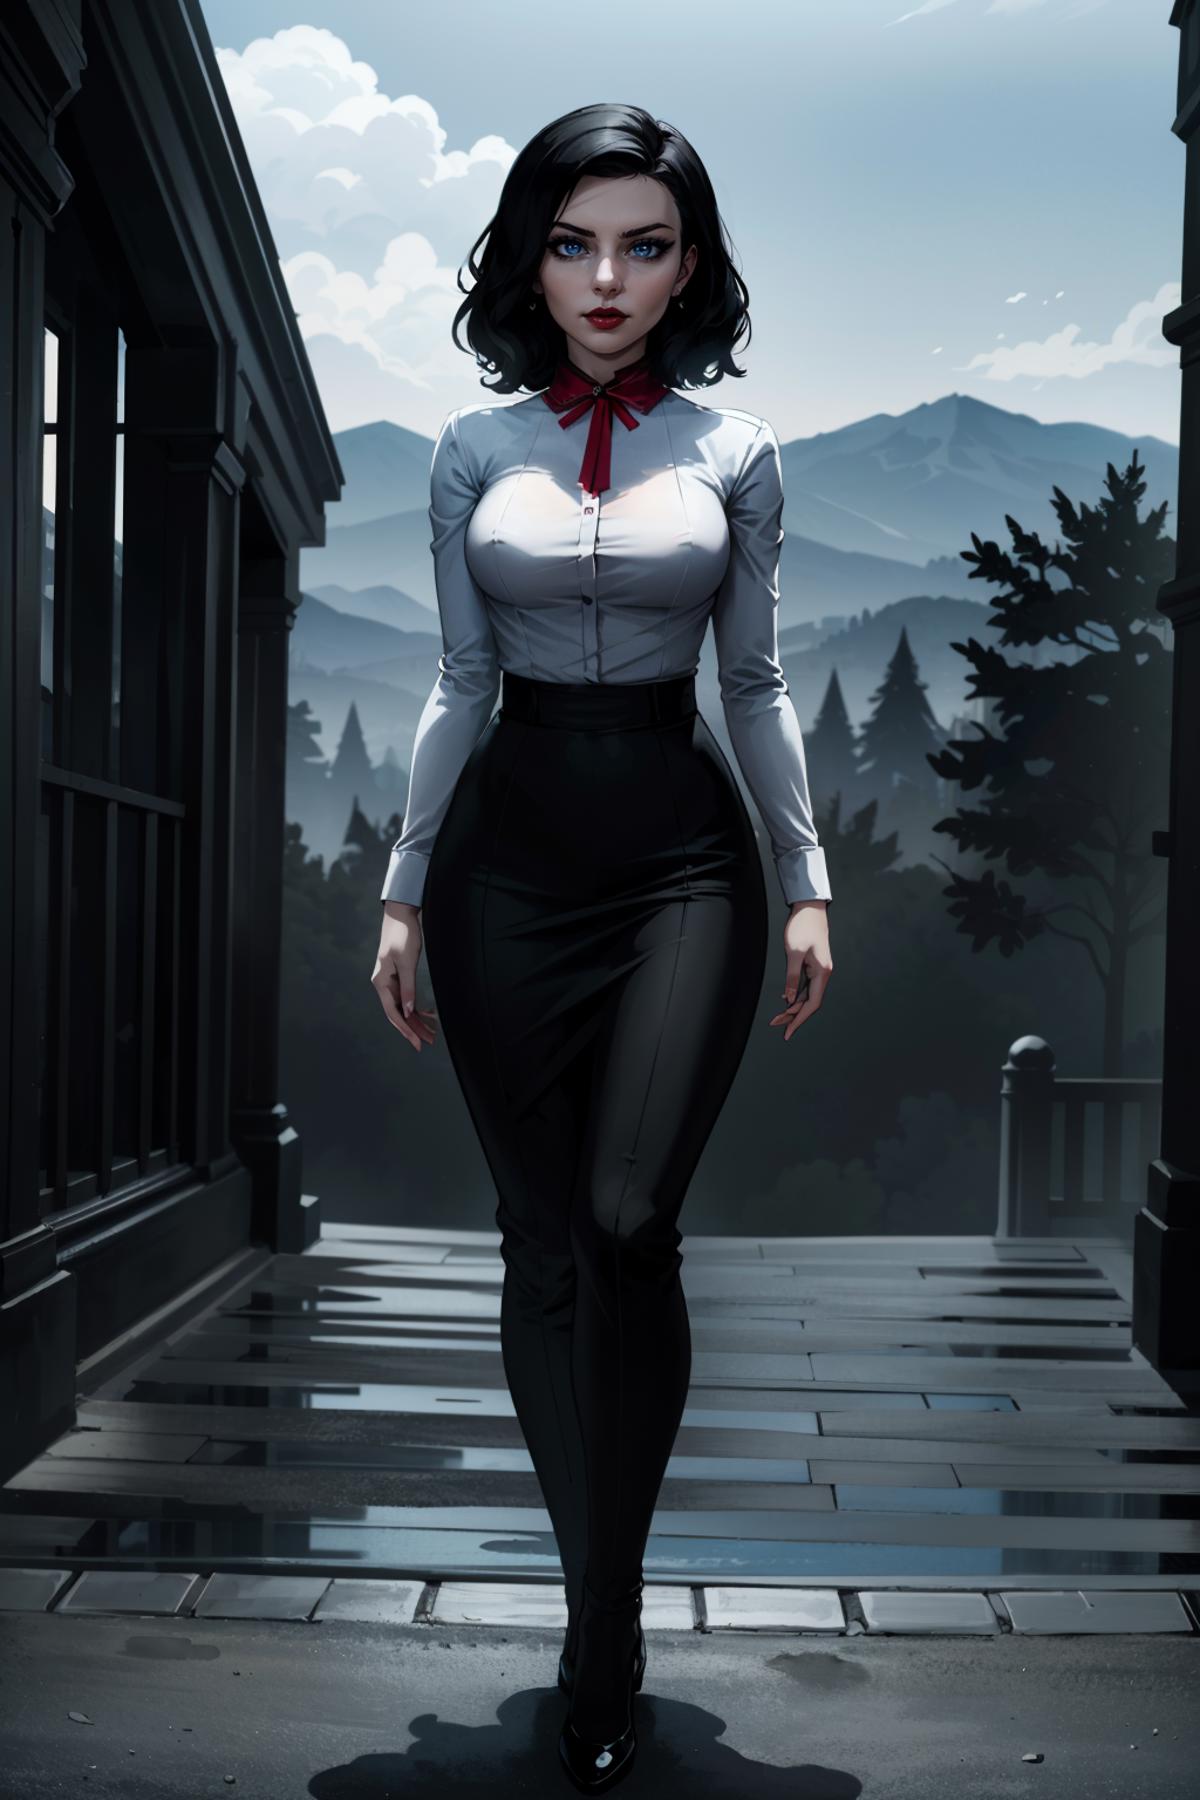 Elizabeth from BioShock Infinite: Burial at Sea image by BloodRedKittie